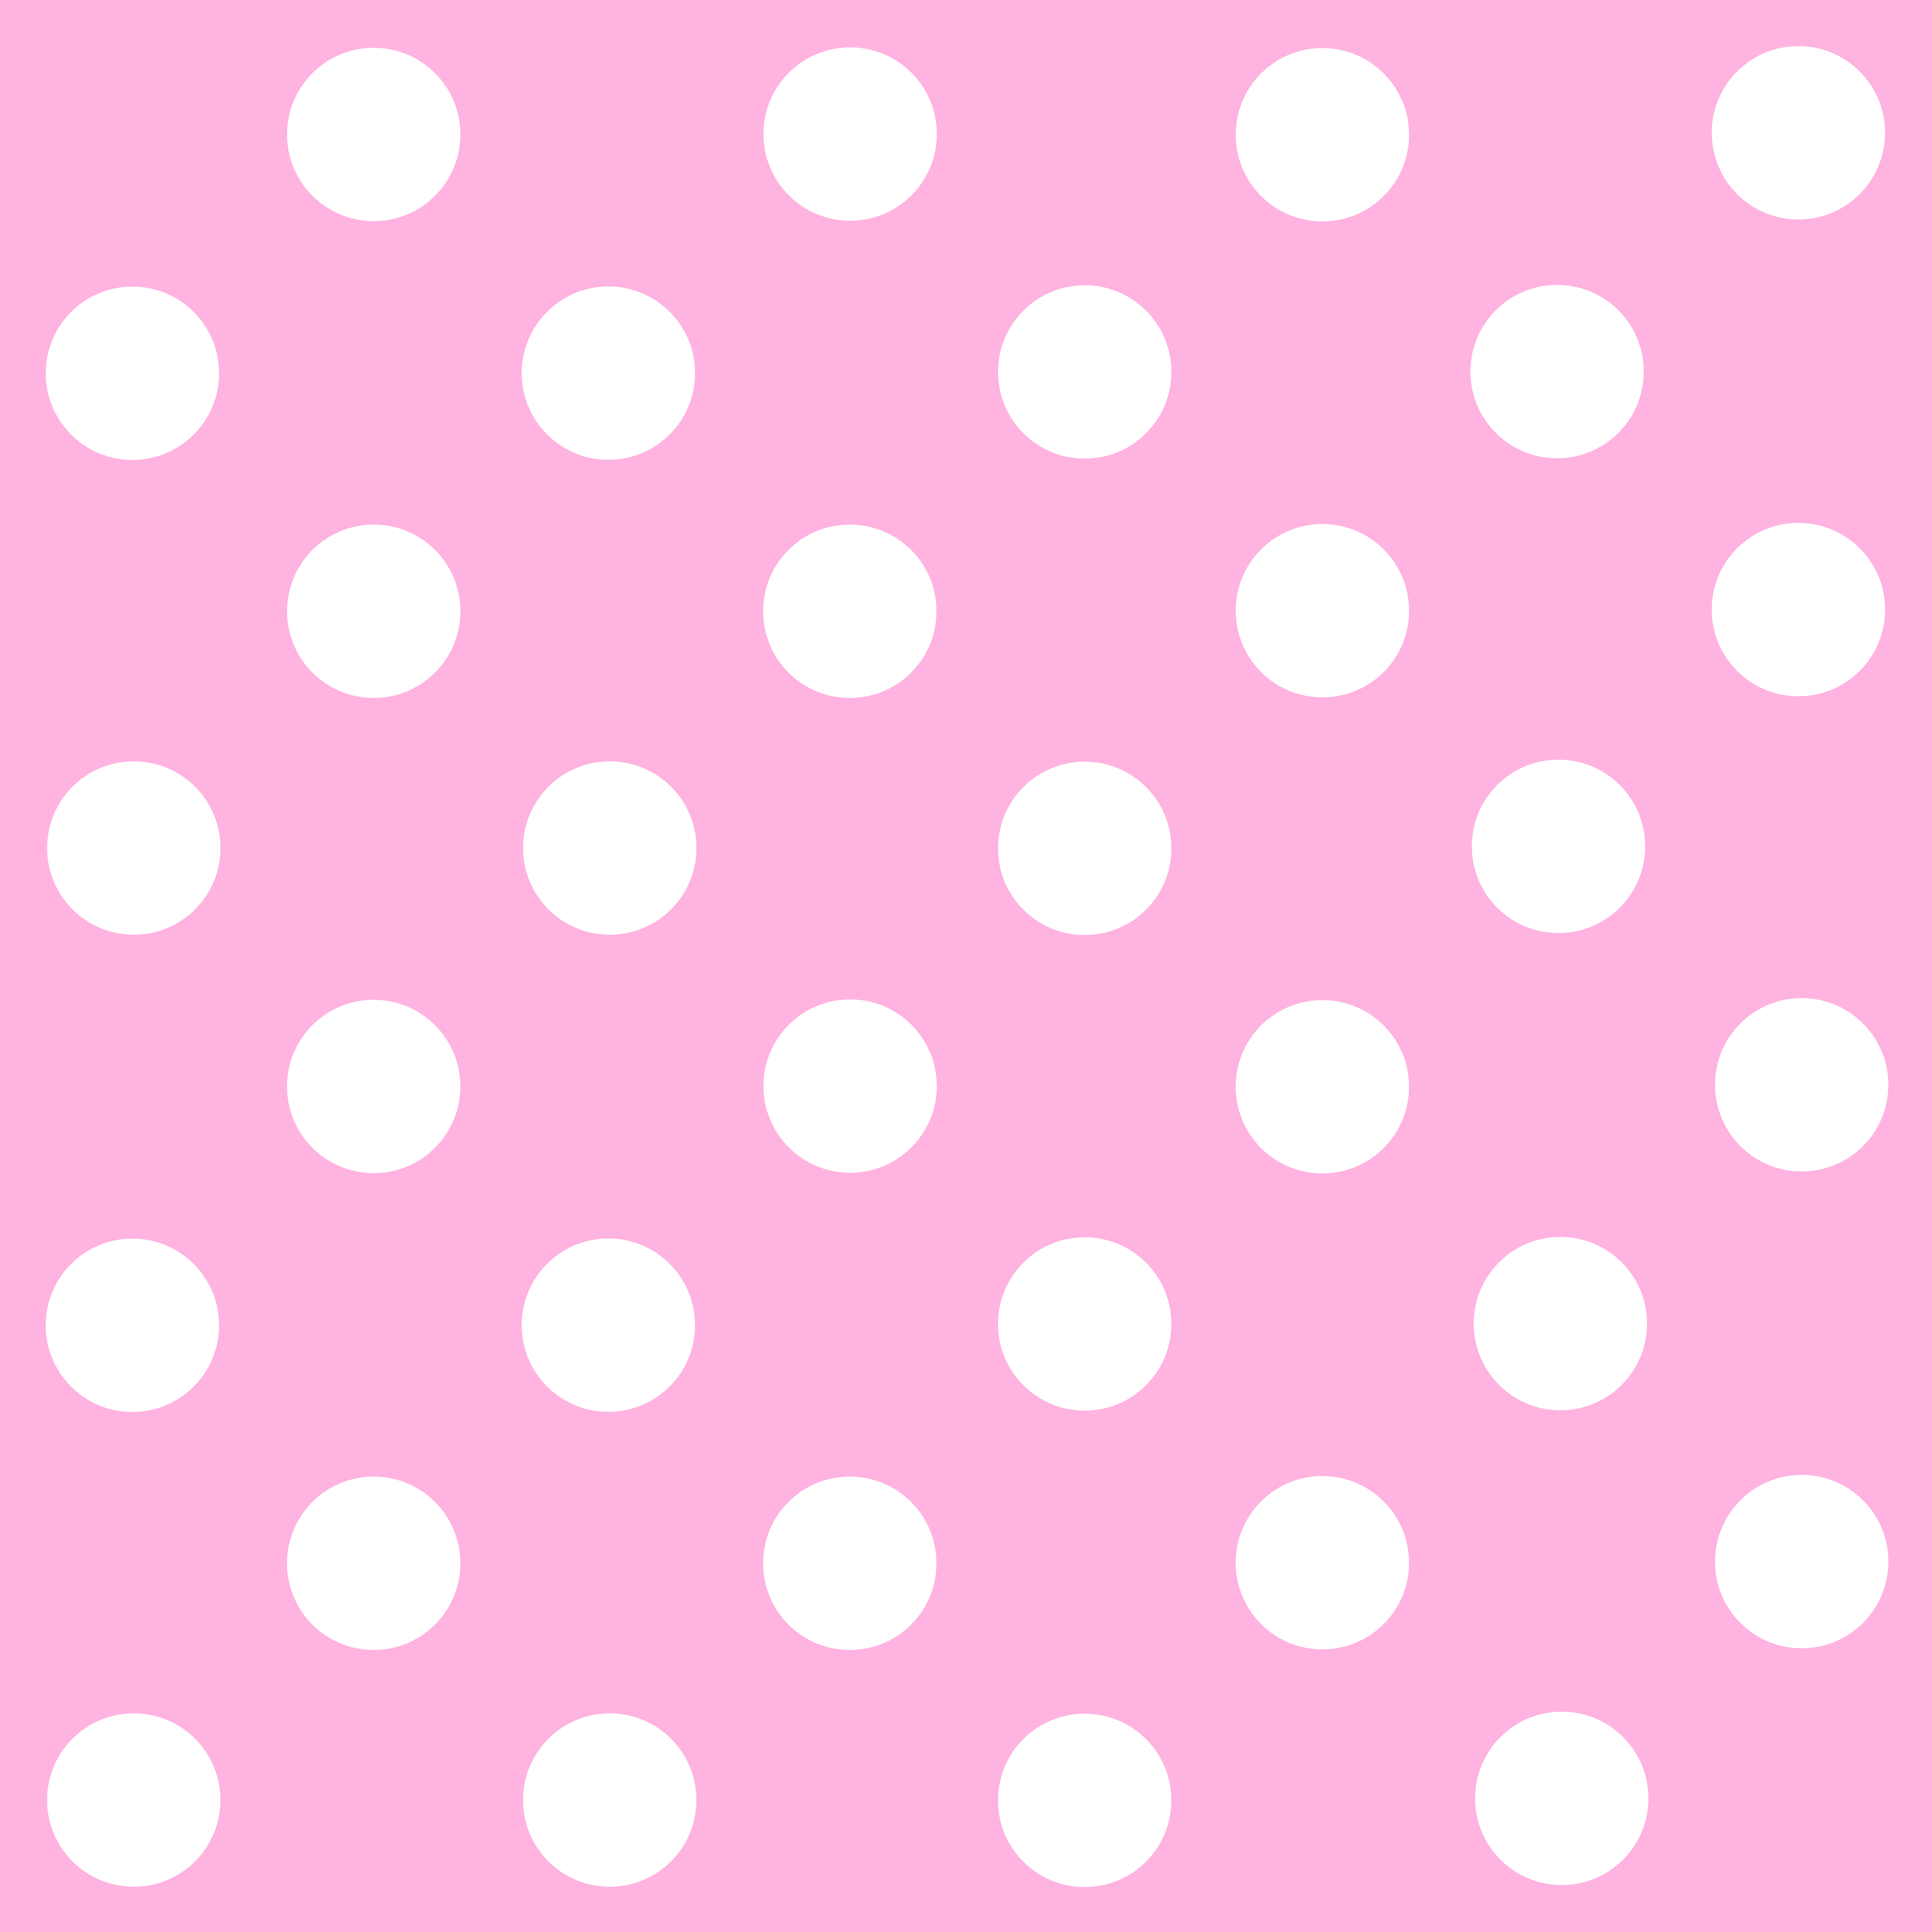 Pink and White Polka Dot Download